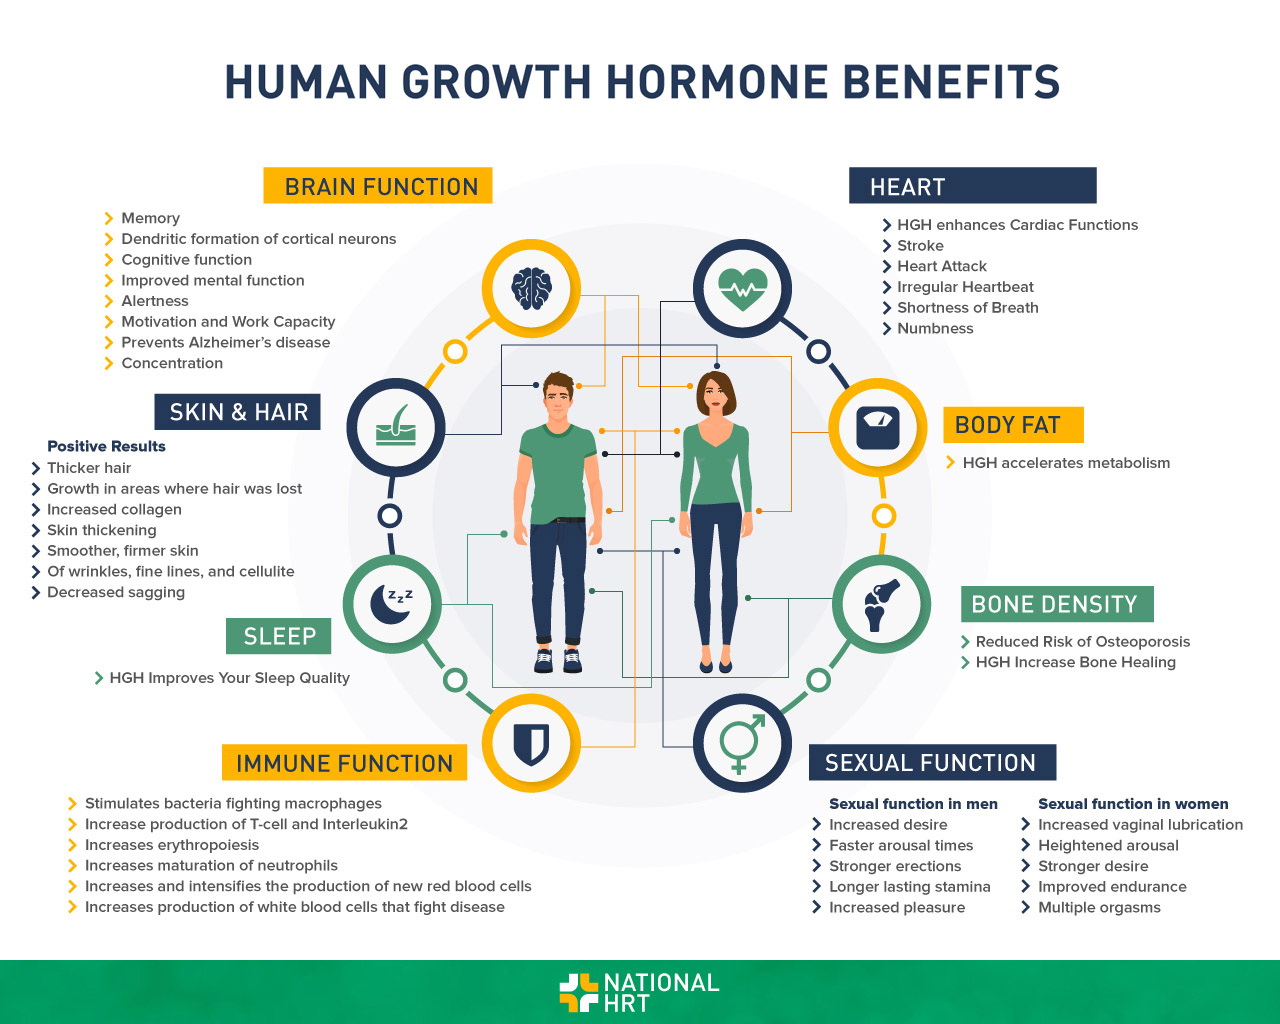 Human Growth Hormone (HGH) Benefits